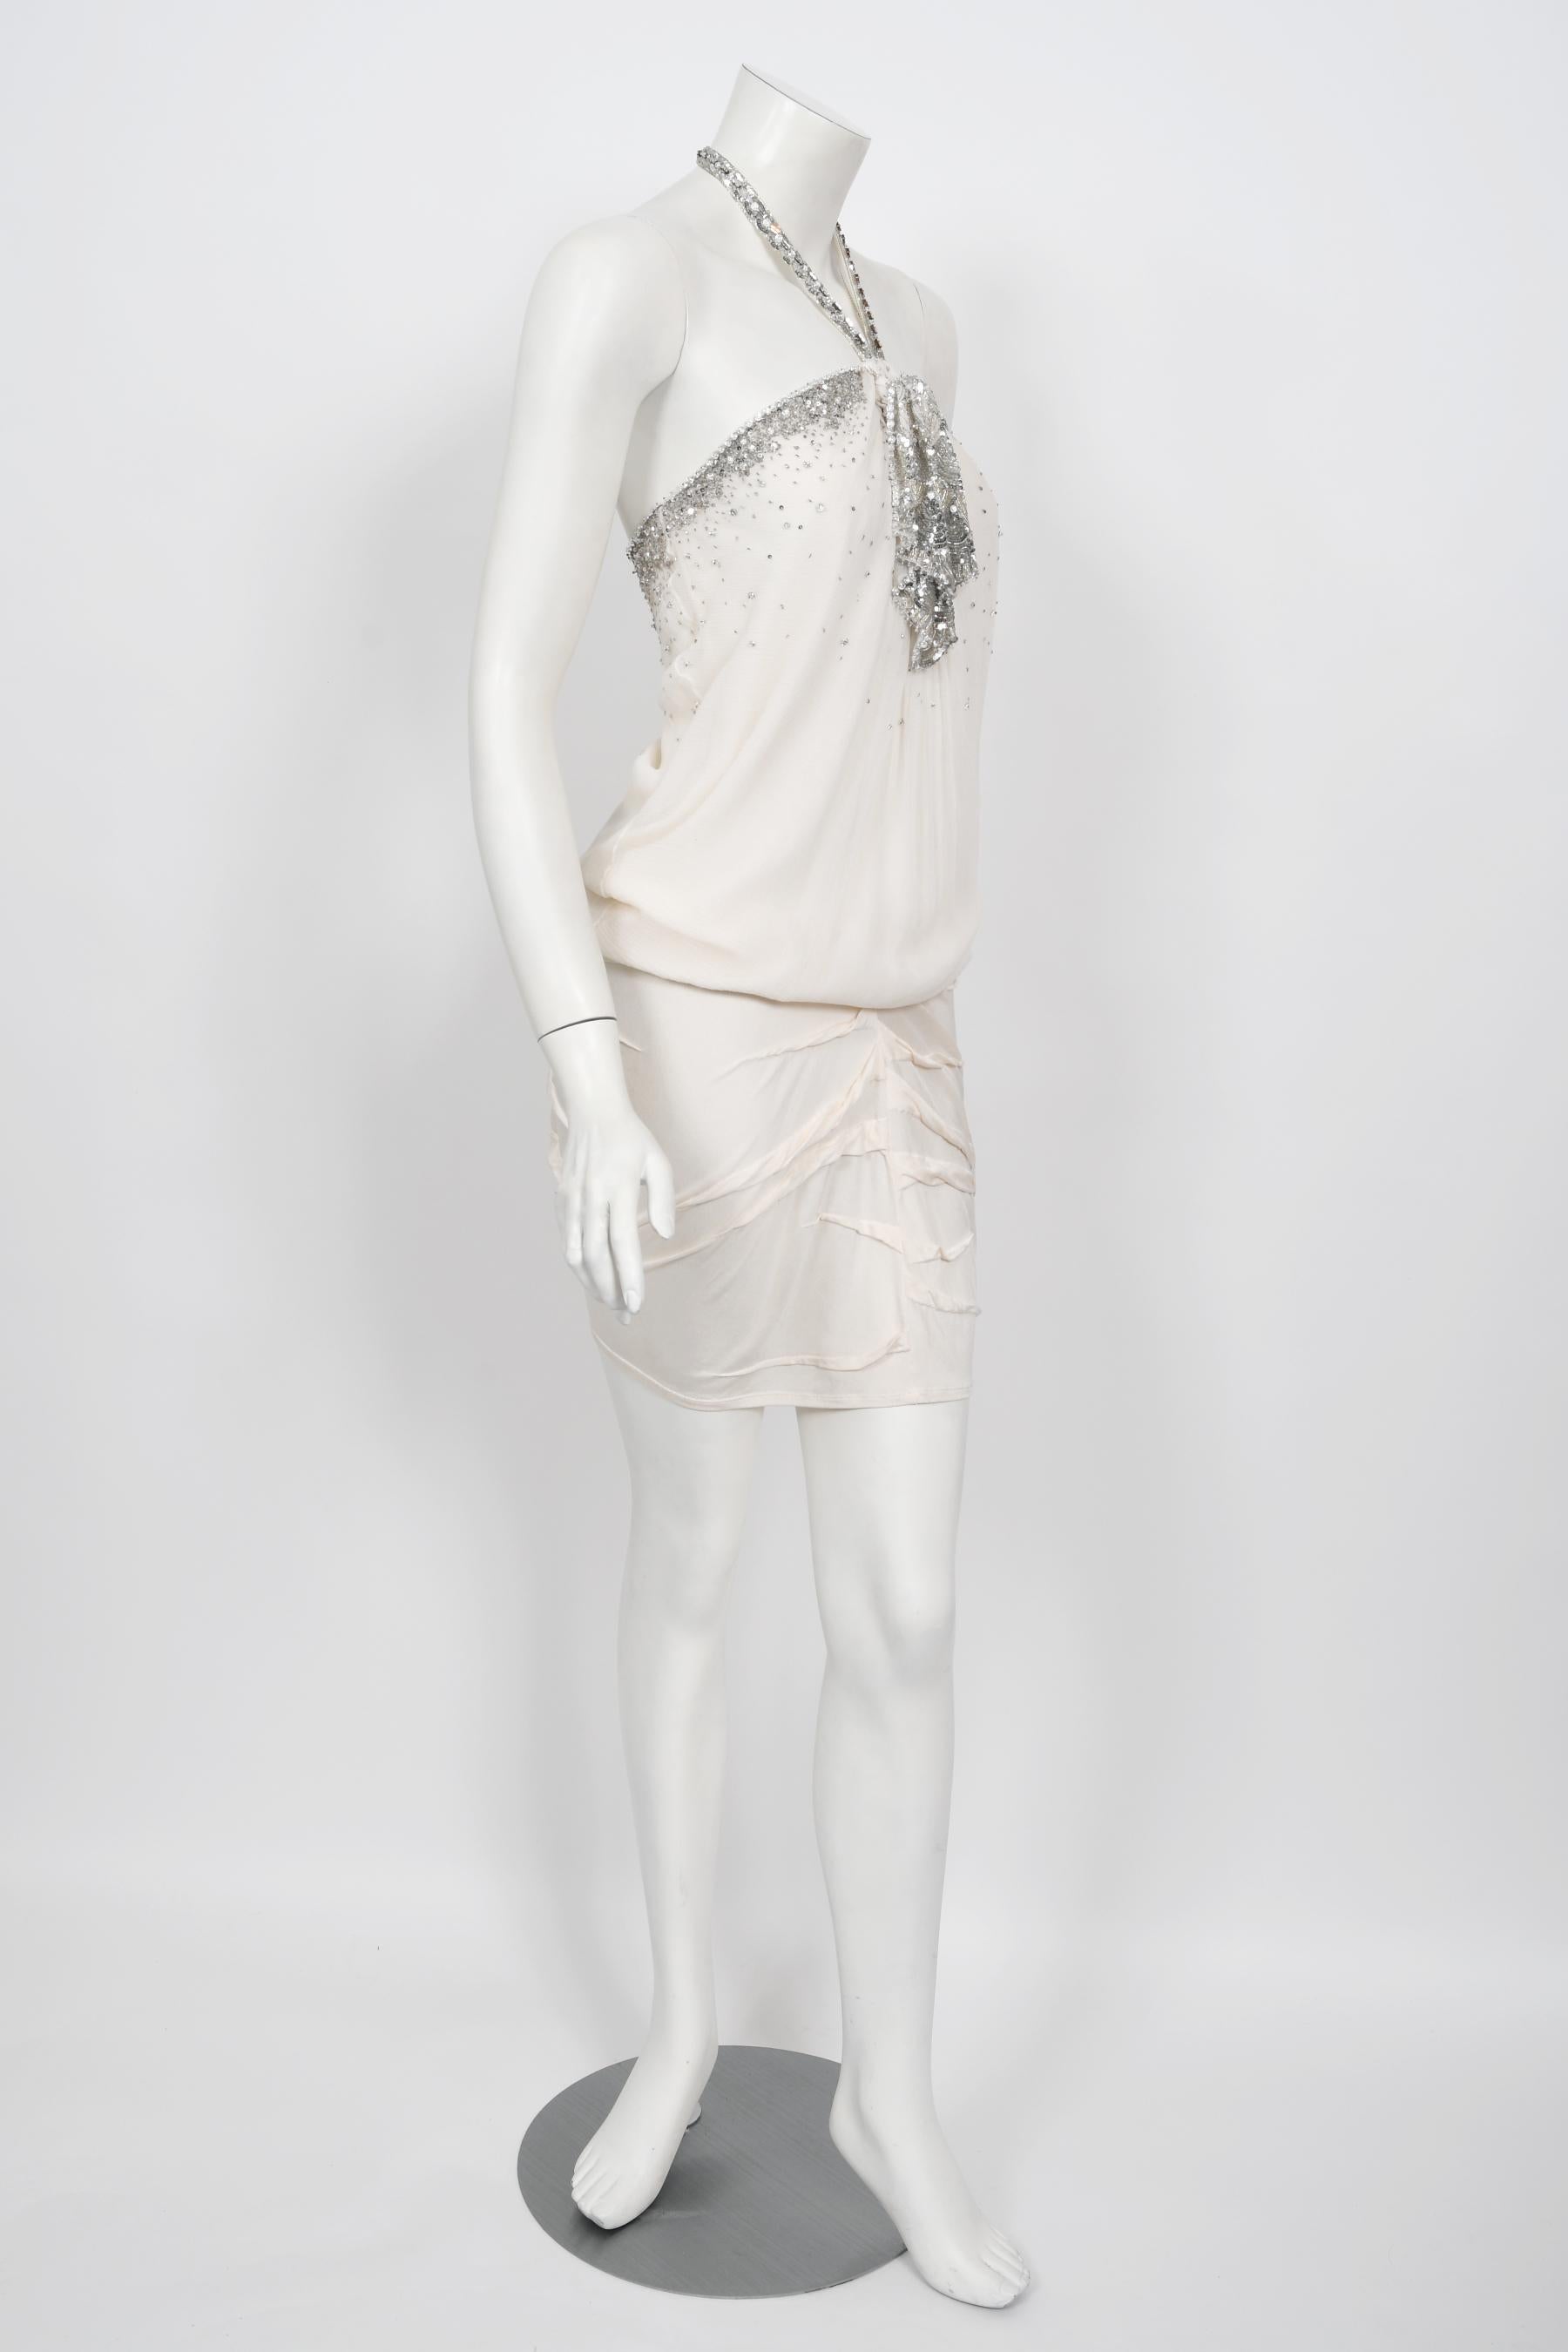 Women's Vintage 2003 Christian Dior by Galliano Beaded Ivory Silk Flapper Mini Dress